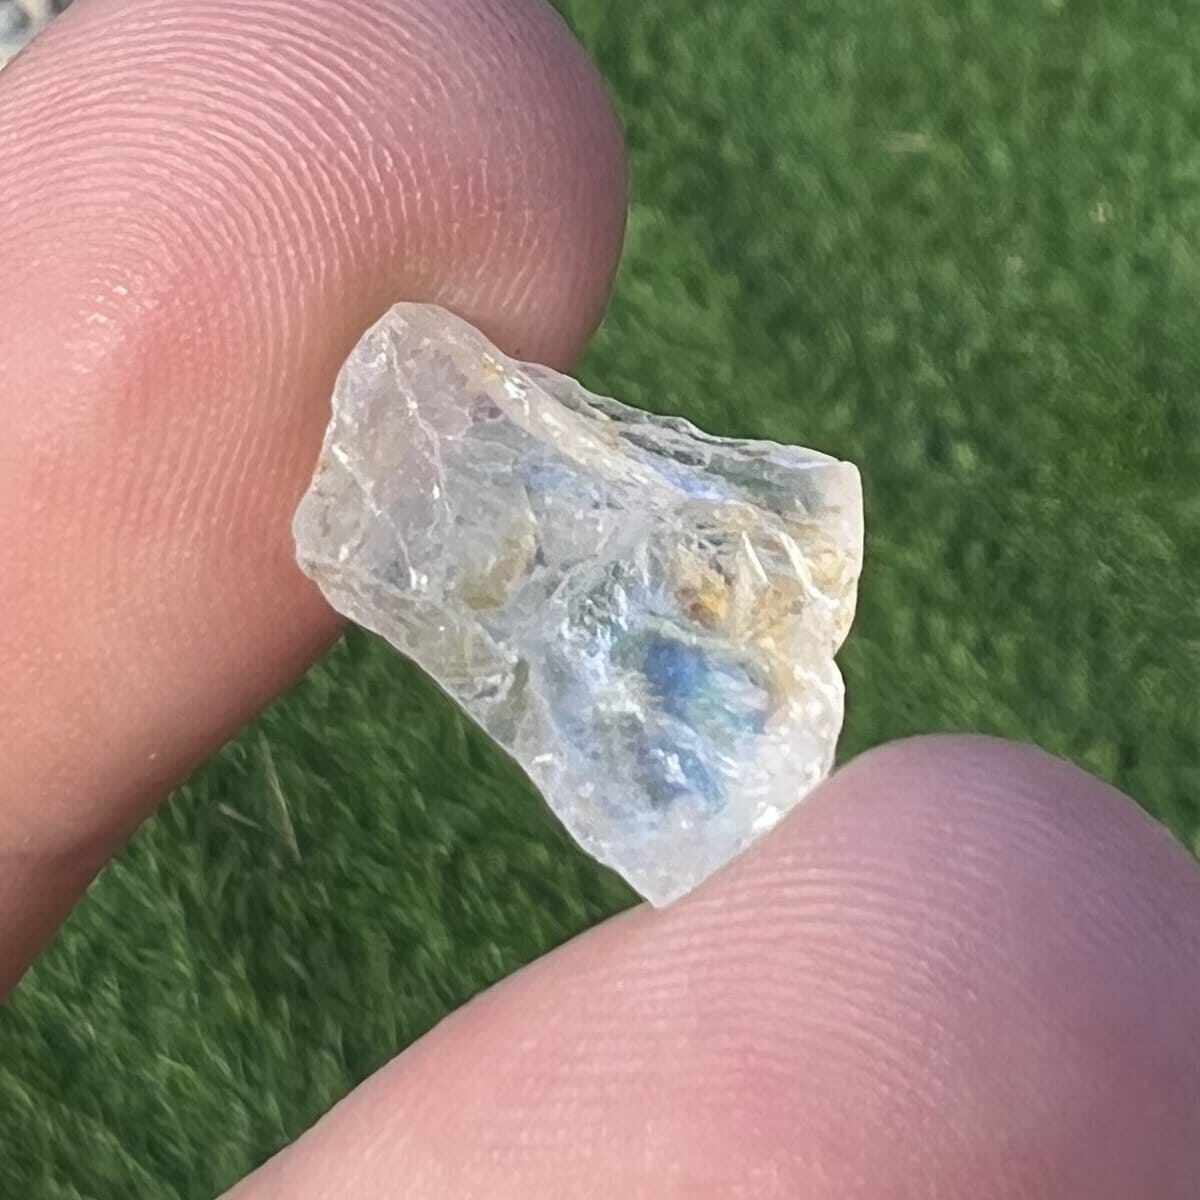 Fenacit nigerian autentic cristal natural unicat a66